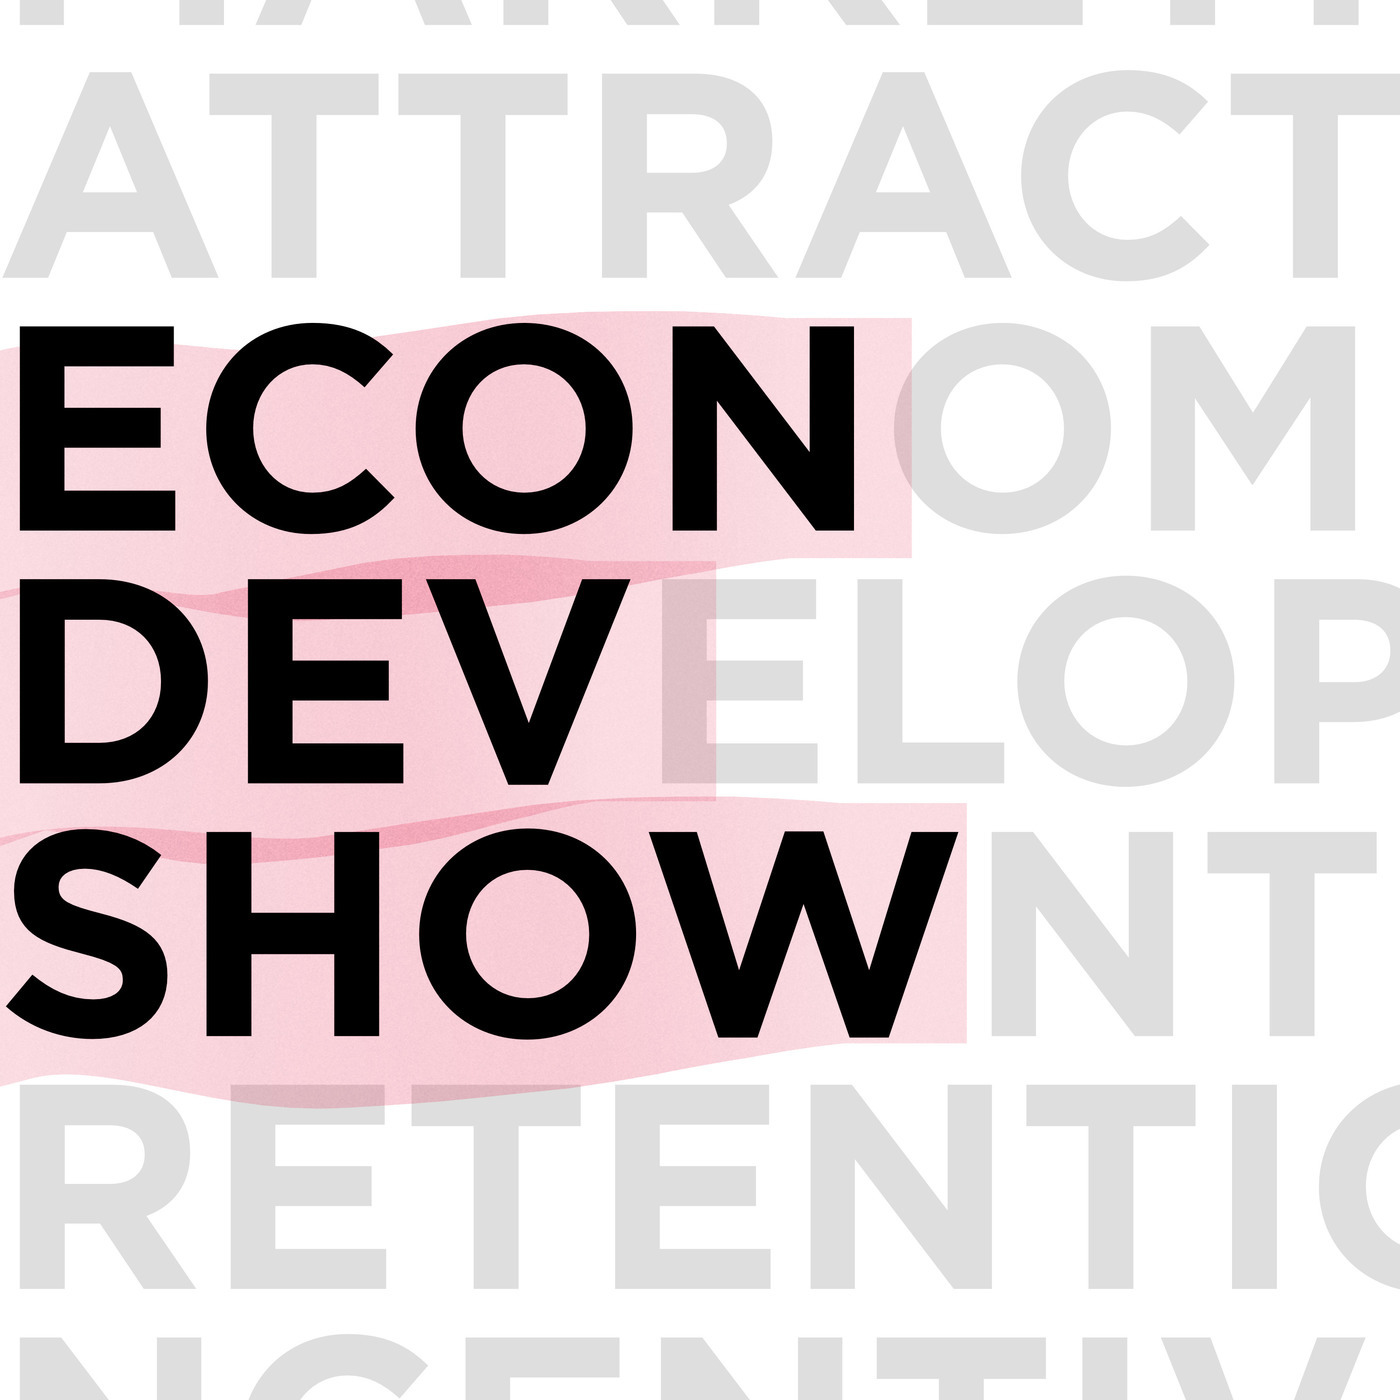 Econ Dev Show Podcast - Economic Development 73: Podcast Powered Economic Development: Part 1